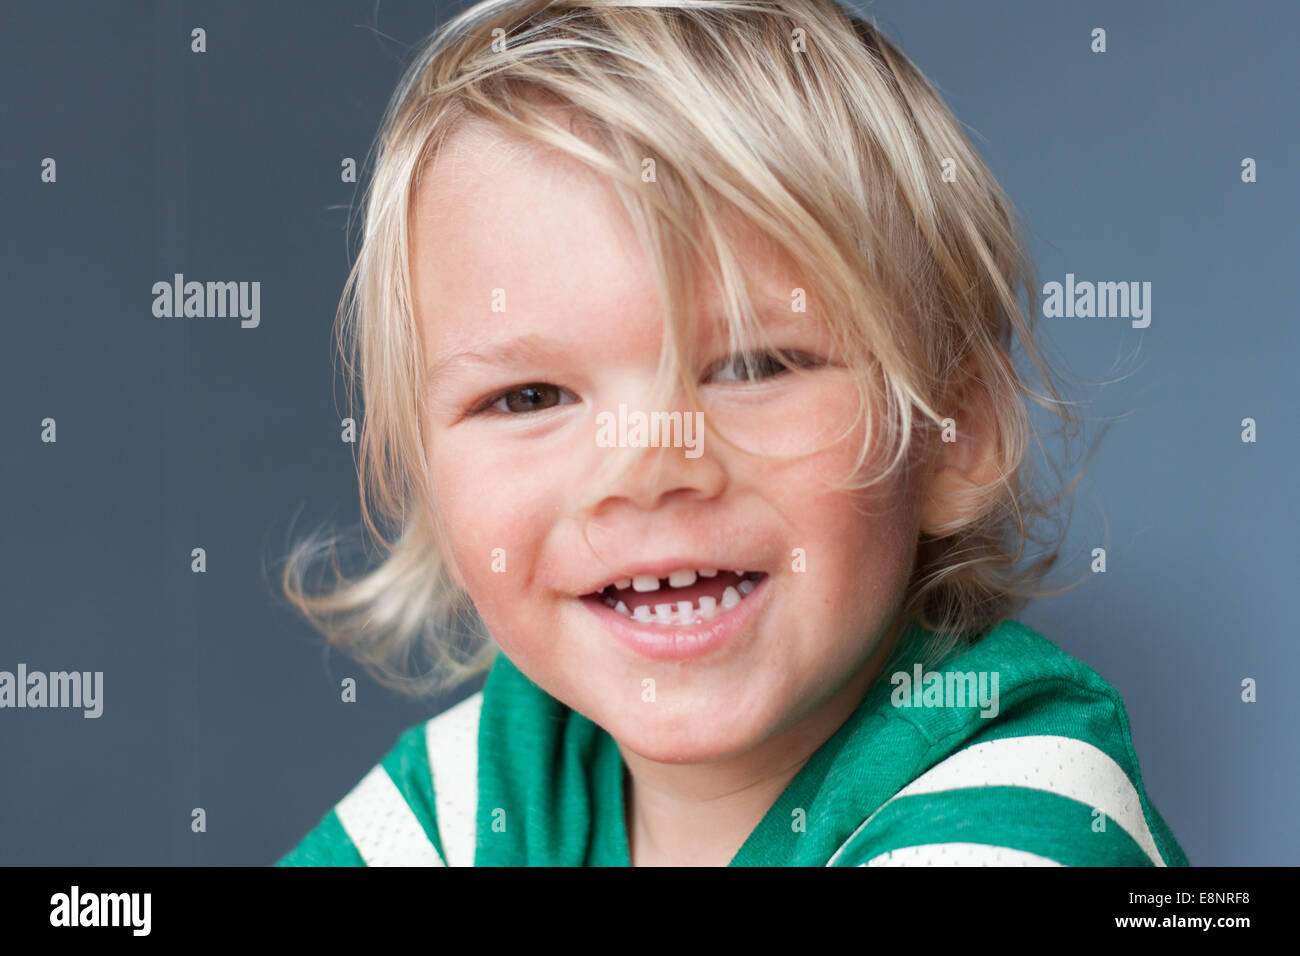 Toddler boy smiling portrait Stock Photo